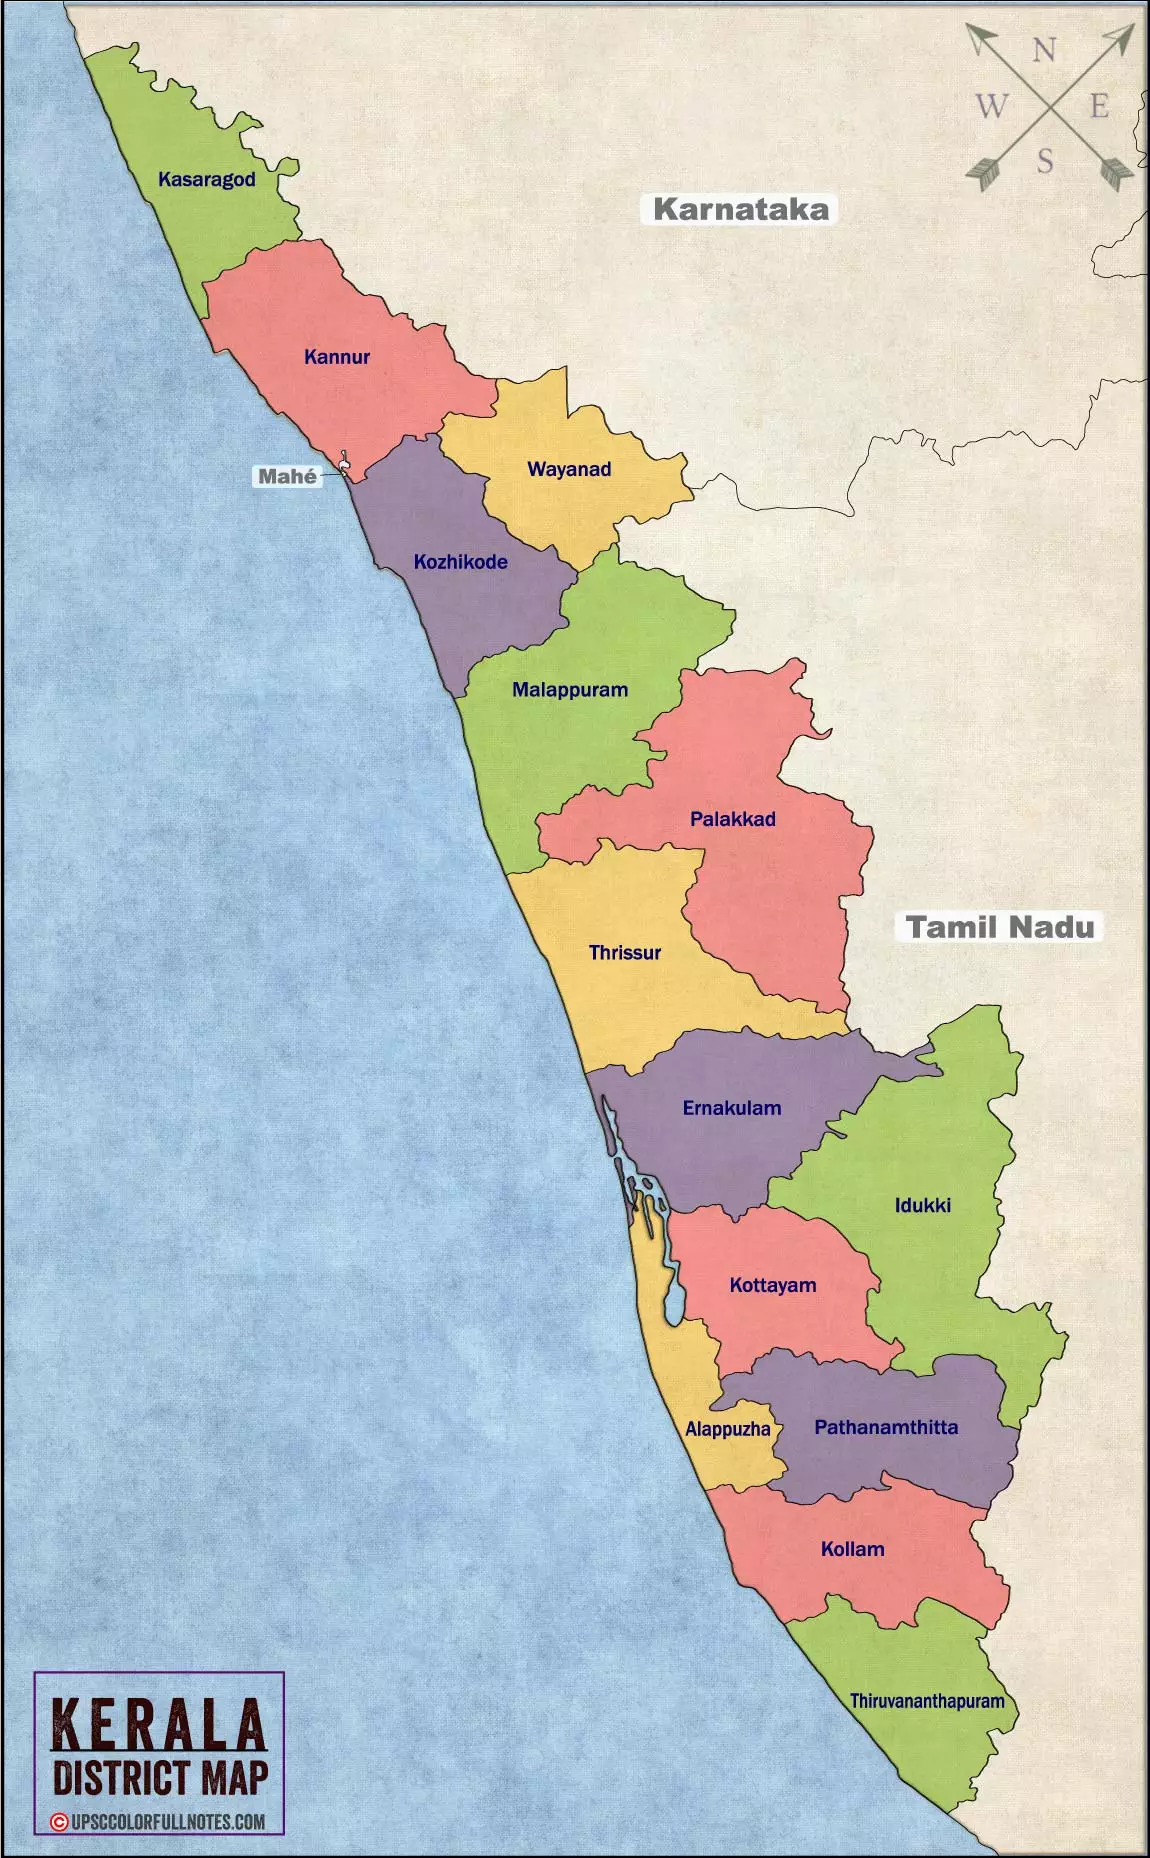 Bhunaksha Maharashtra  Check Land Survey Maps Online in Maharashtra